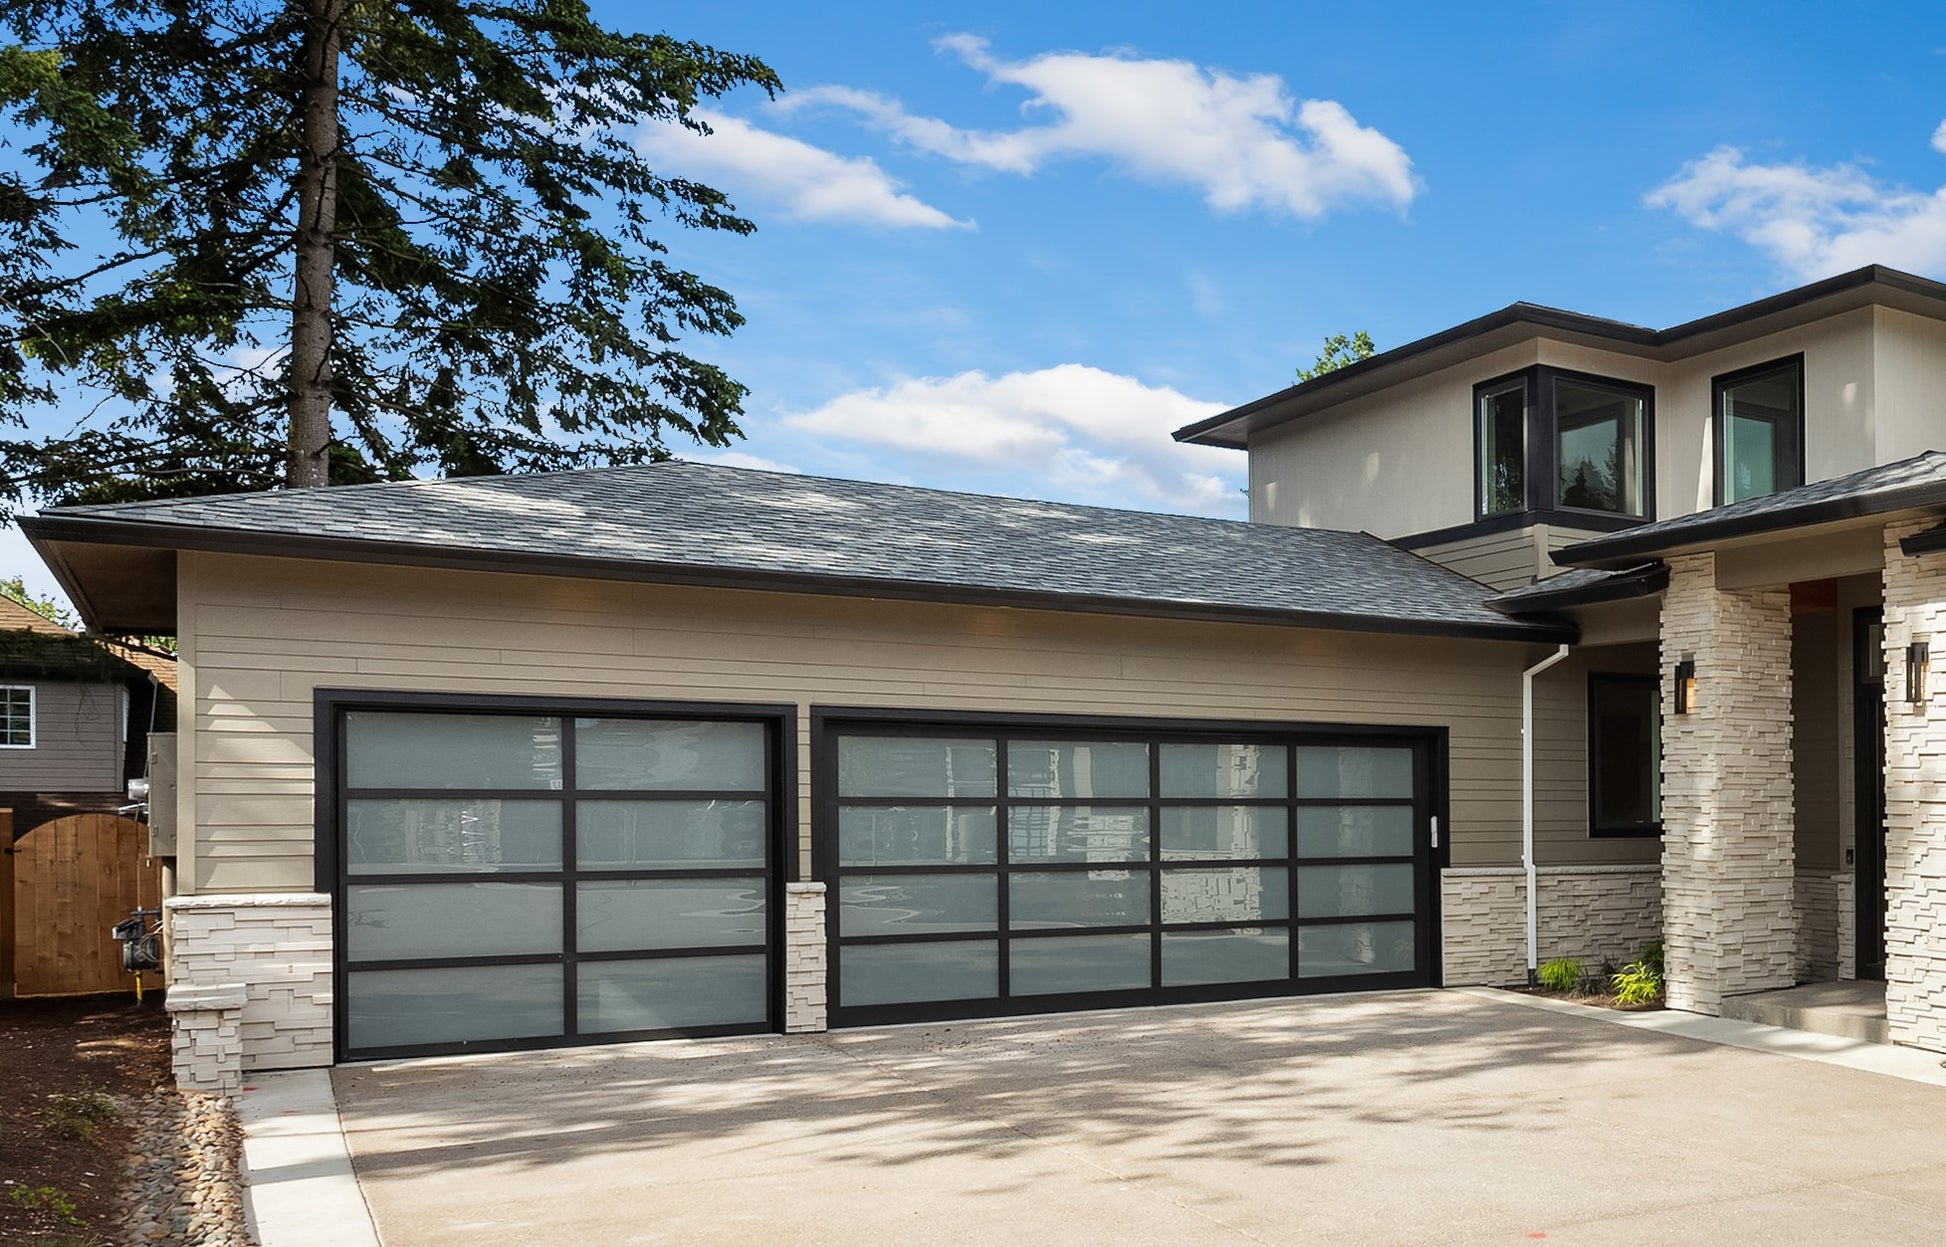 8 X 7 Full View Modern Garage Door With Matte Black Finish With Froste –  nickkys garage doors